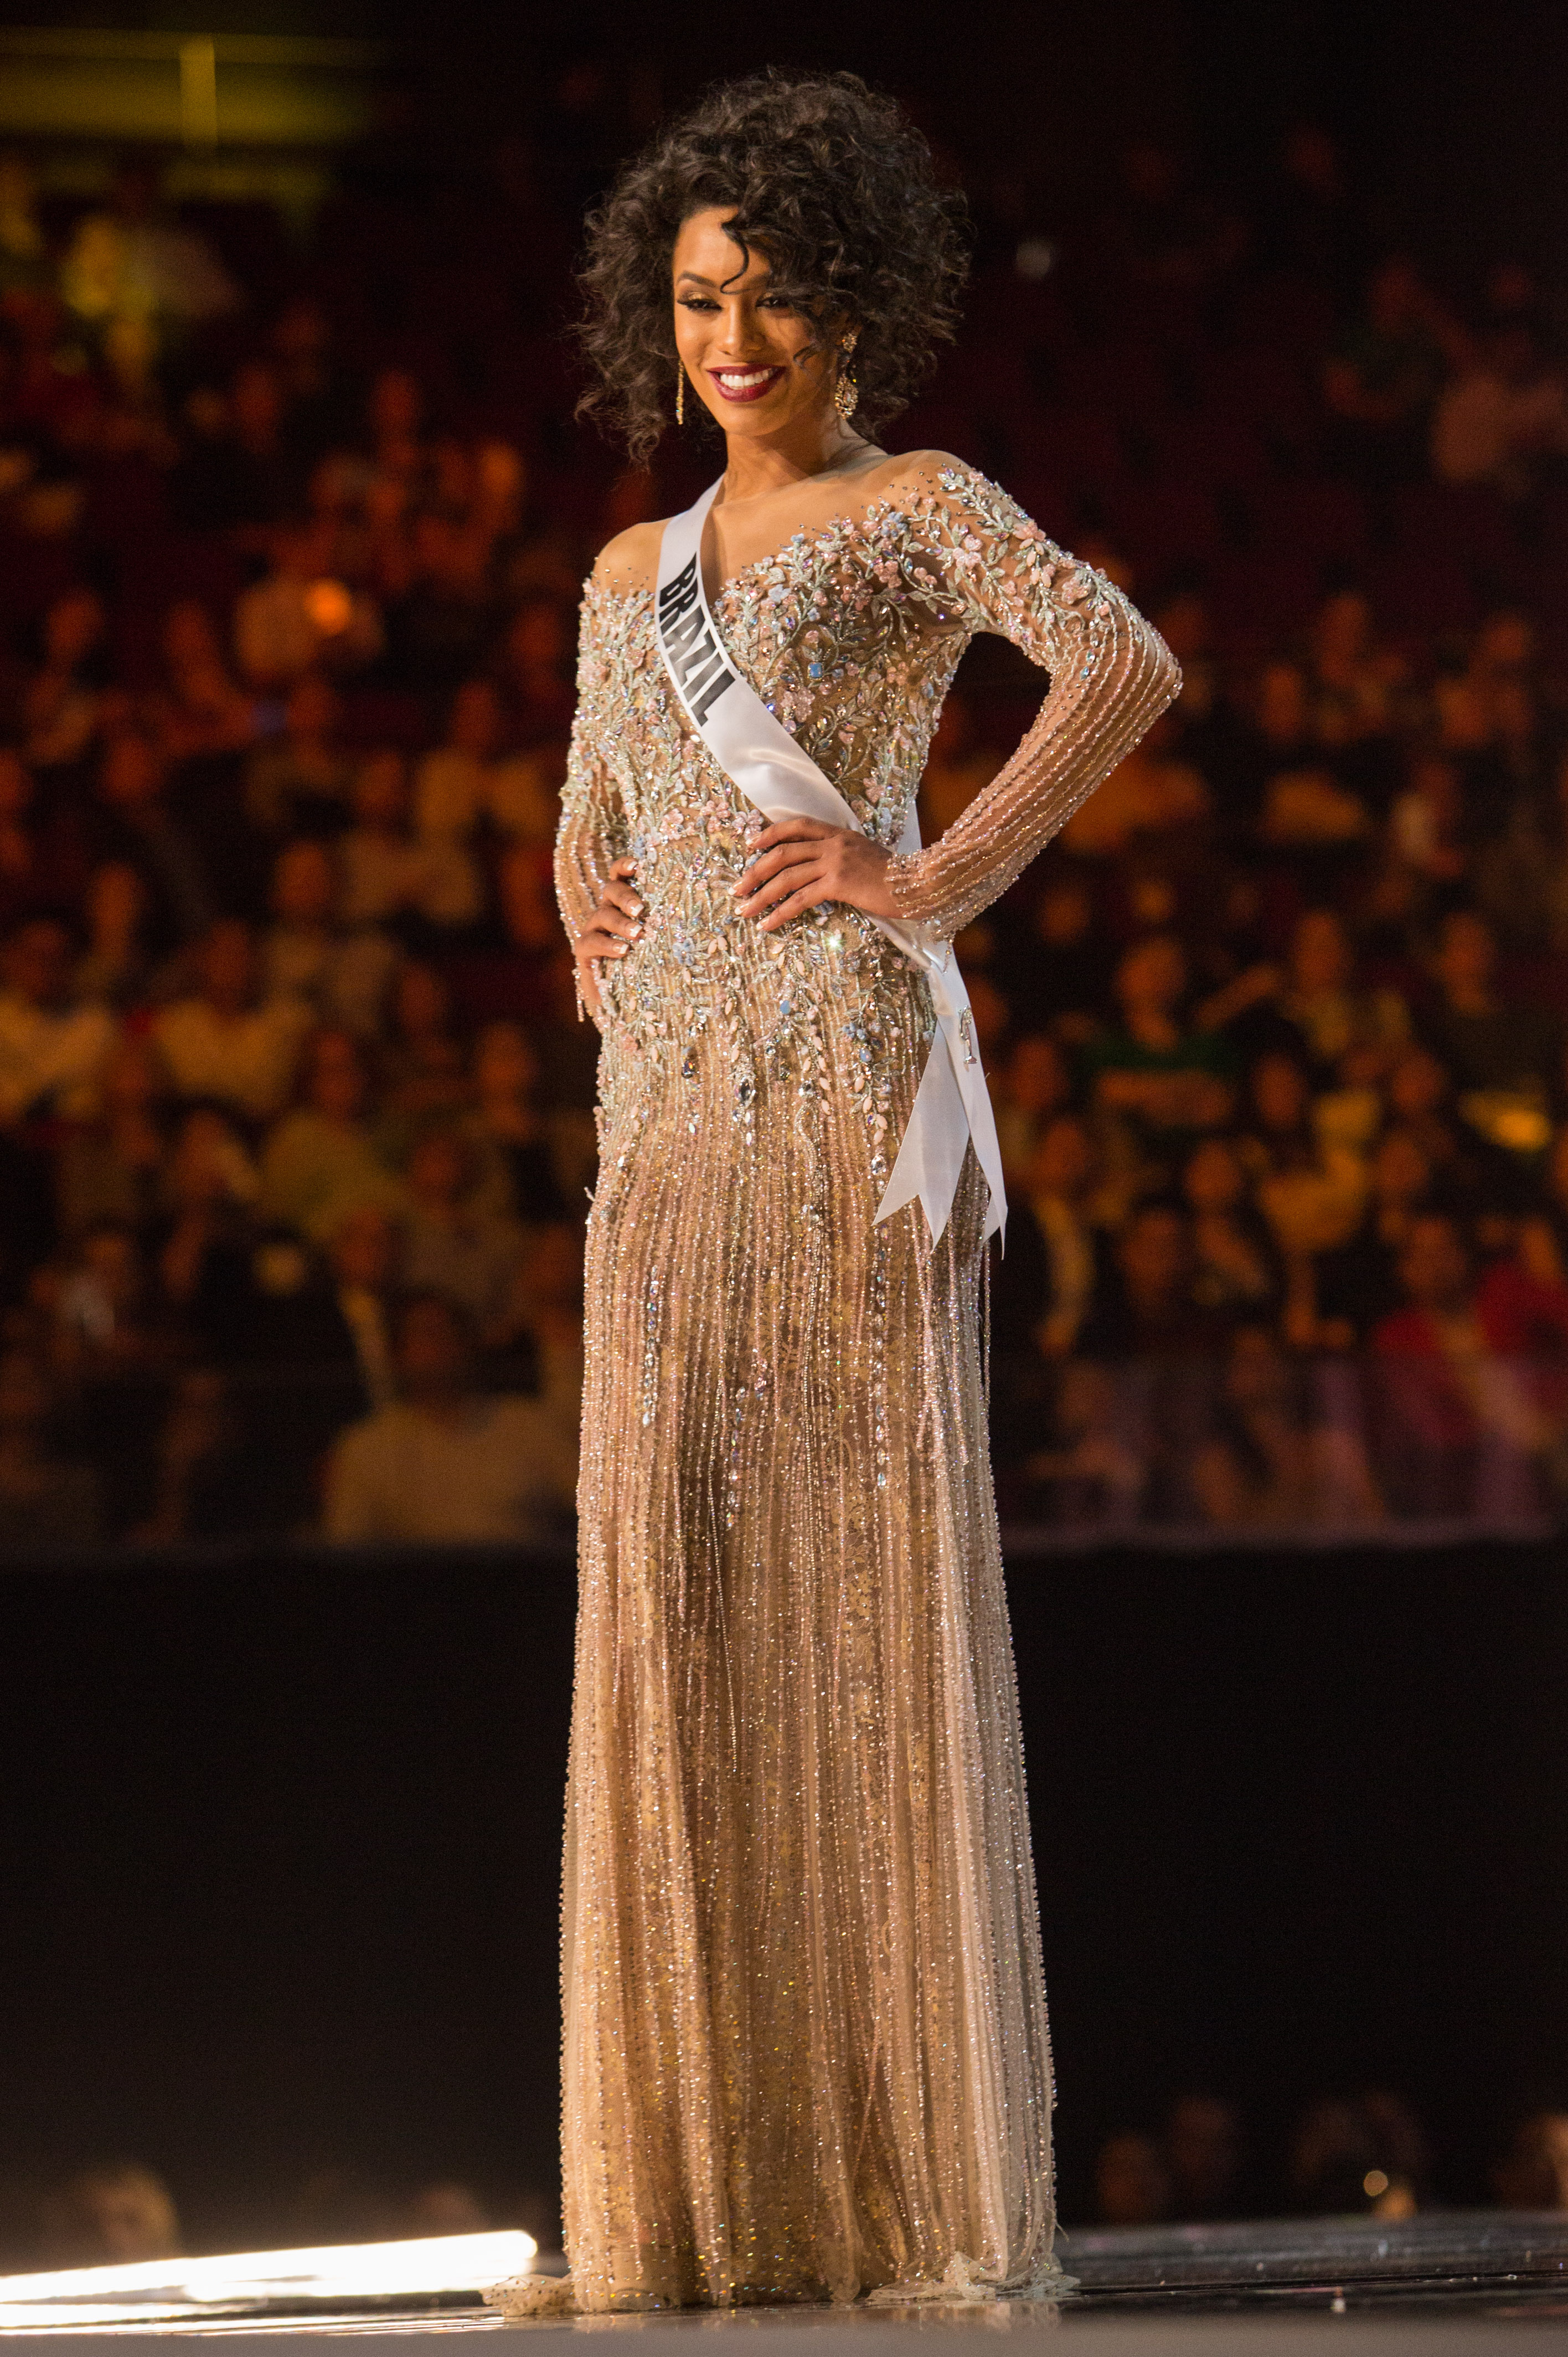 Raissa Santana, Miss Brazil 2016 